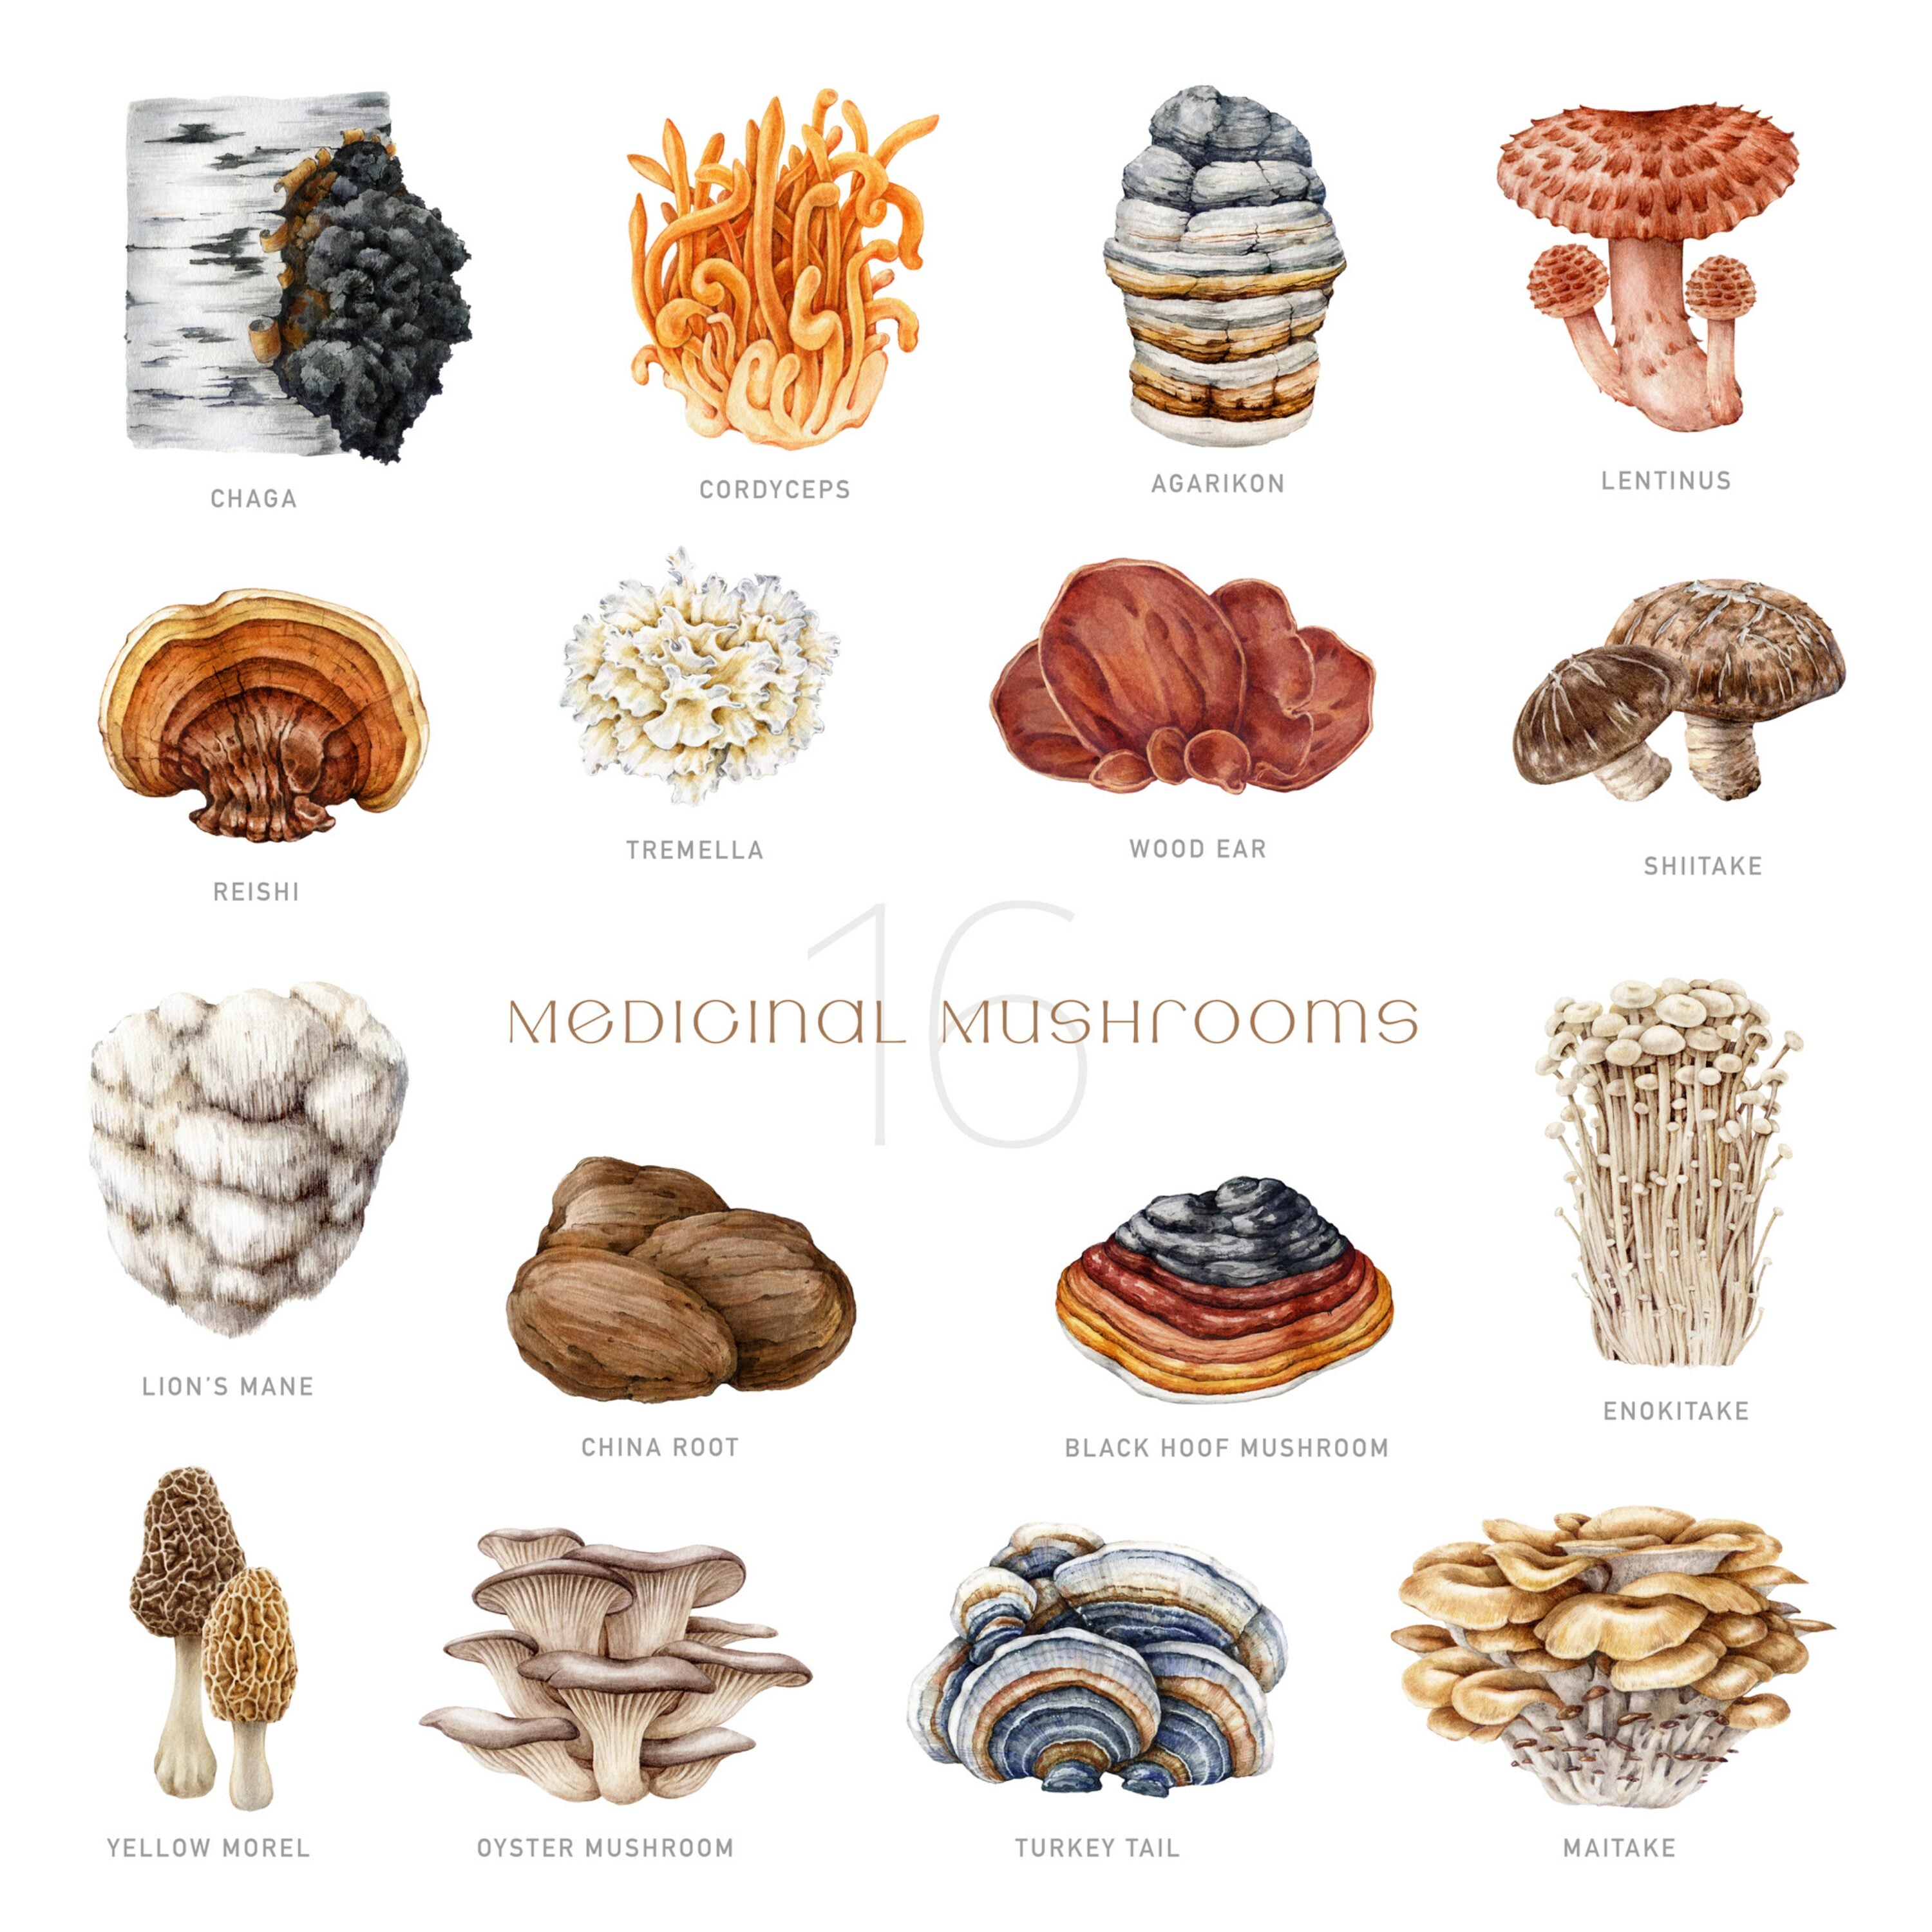 Medicinal mushrooms used in traditional medicine worldwide for health benefits: reishi, chaga, lion's mane, cordyceps, turkey tail. 